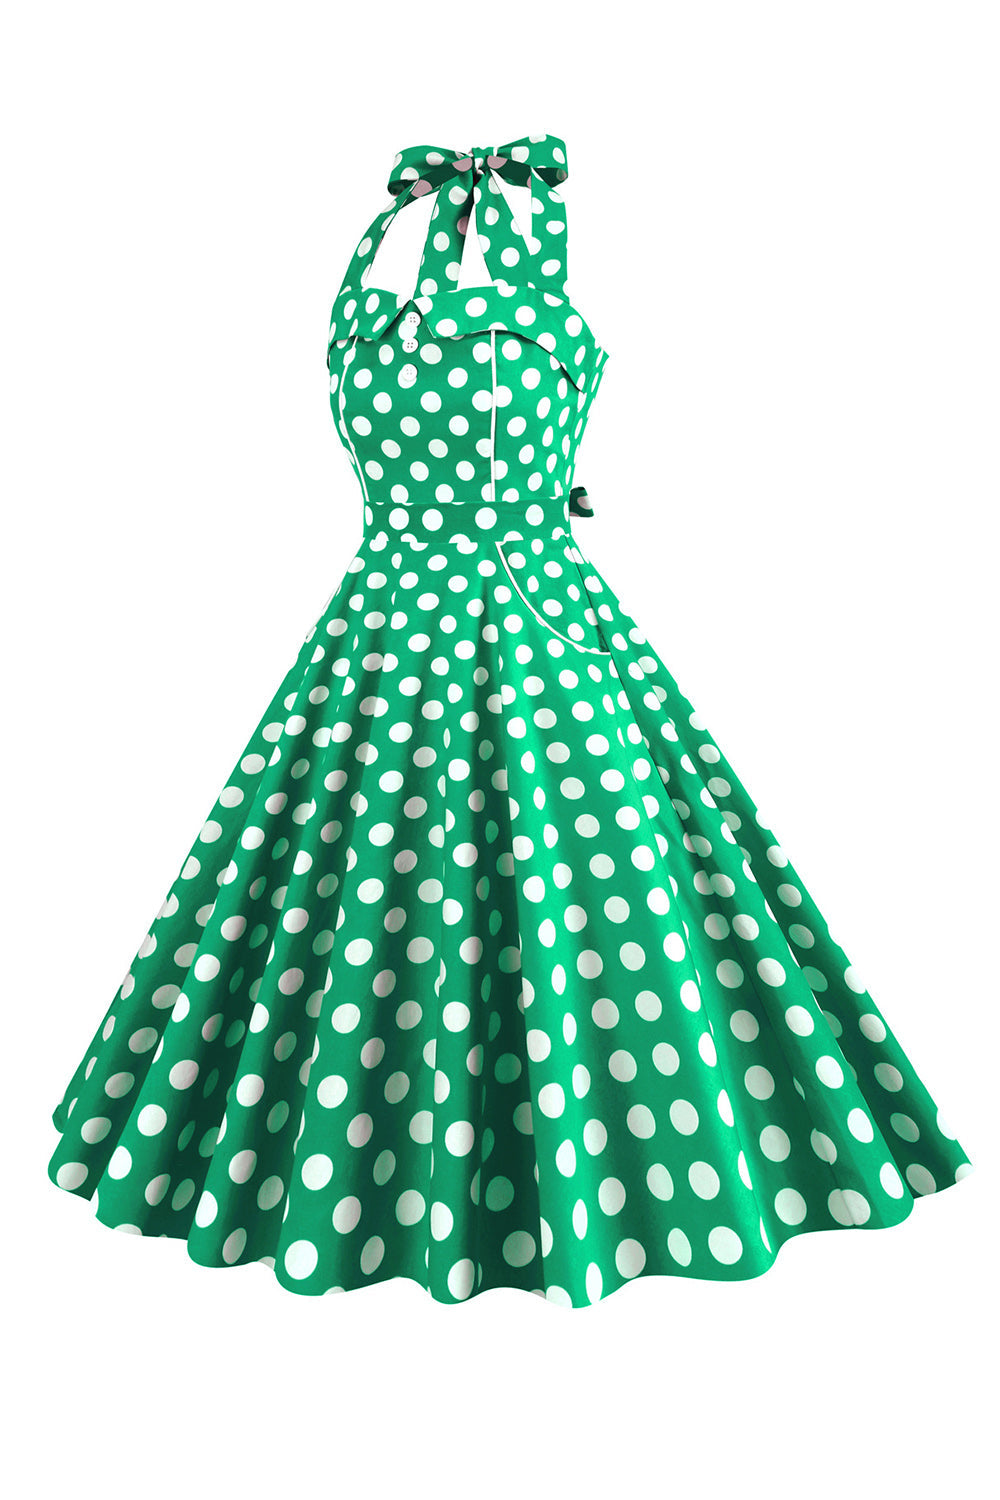 Polka Dots Halter Yellow Swing 1950s Dress